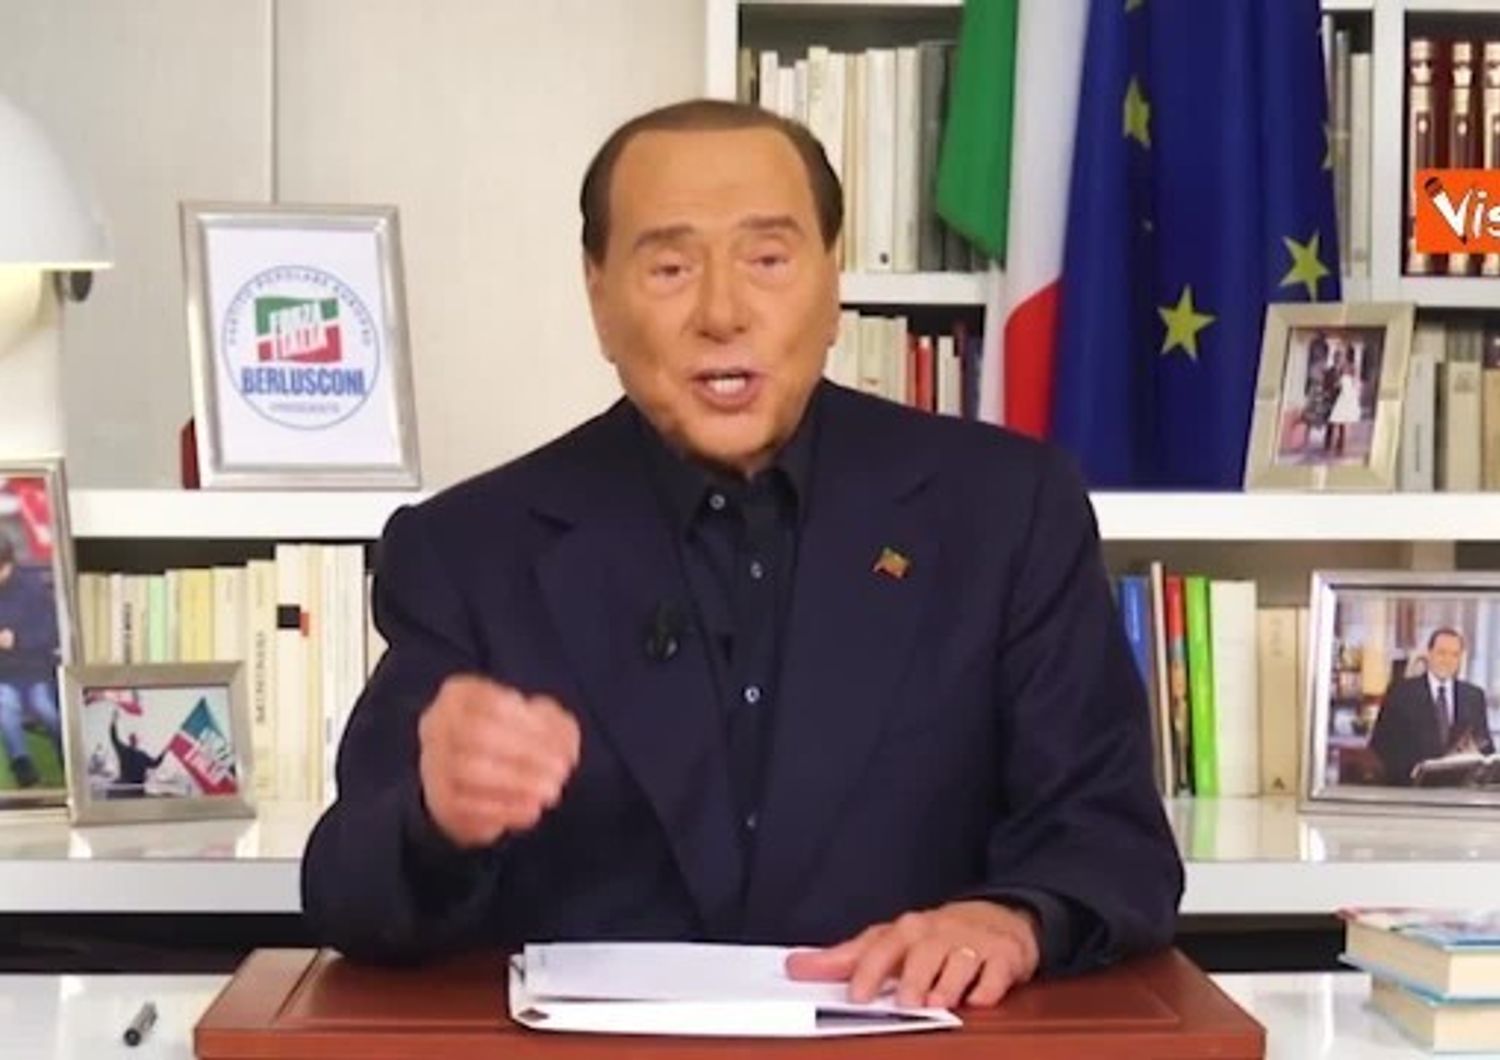 Centrodestra destra guarda economia Berlusconi flat tax a 23%